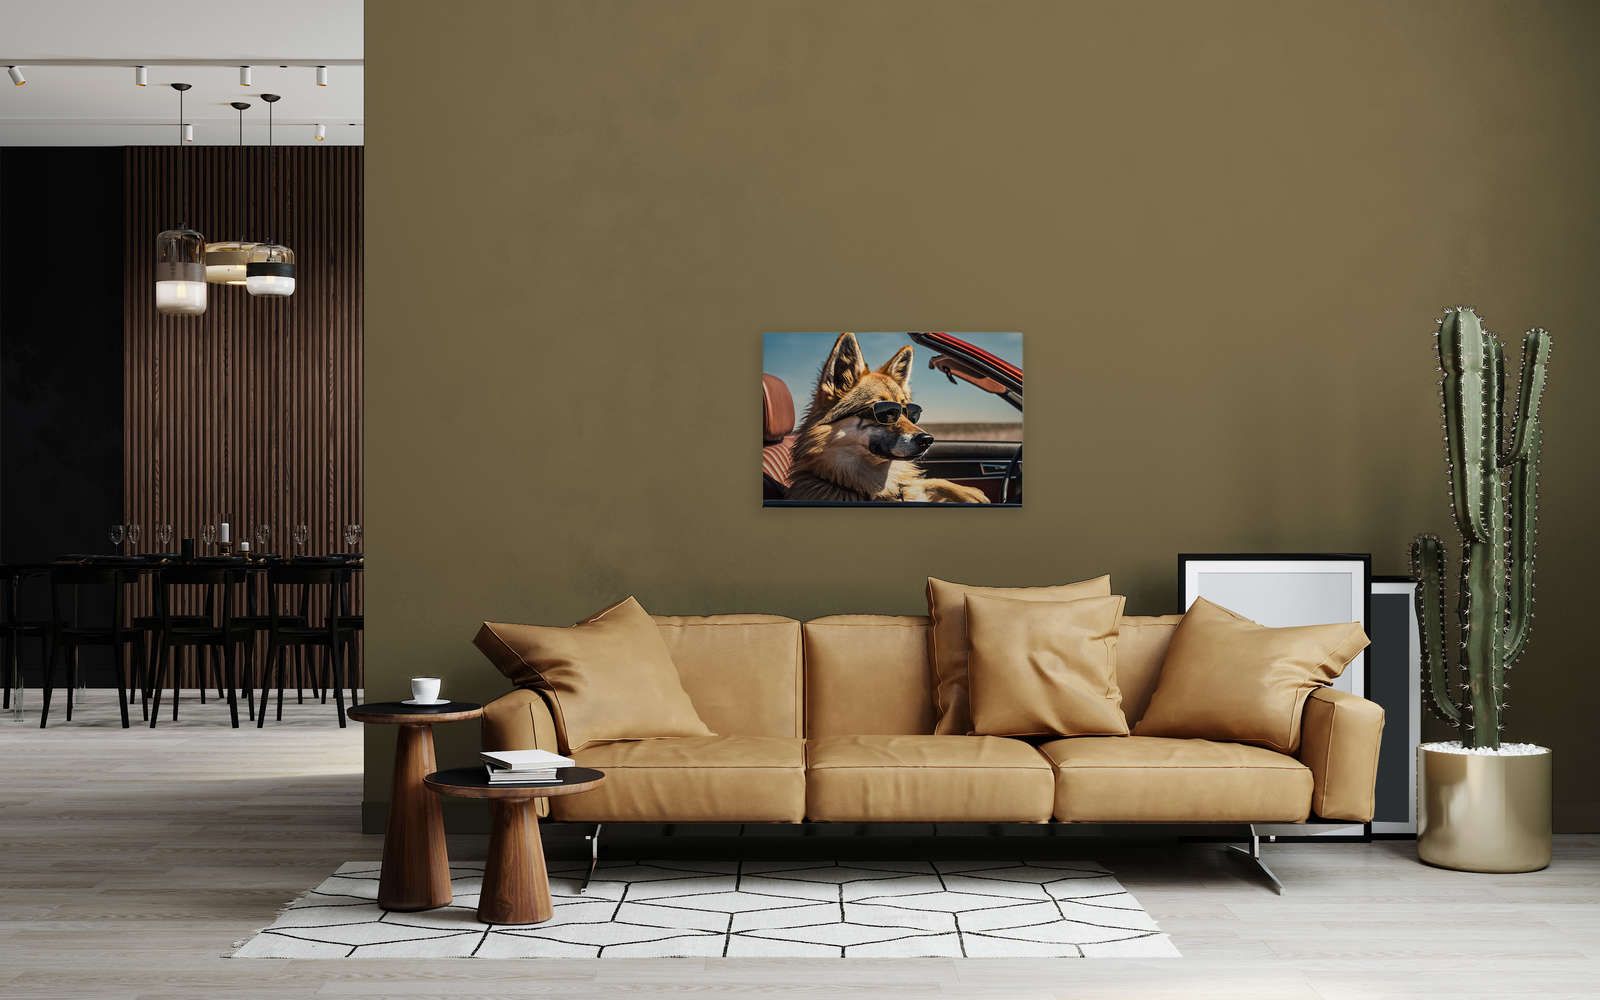             KI canvas schilderij »kruipende wolf« - 90 cm x 60 cm
        